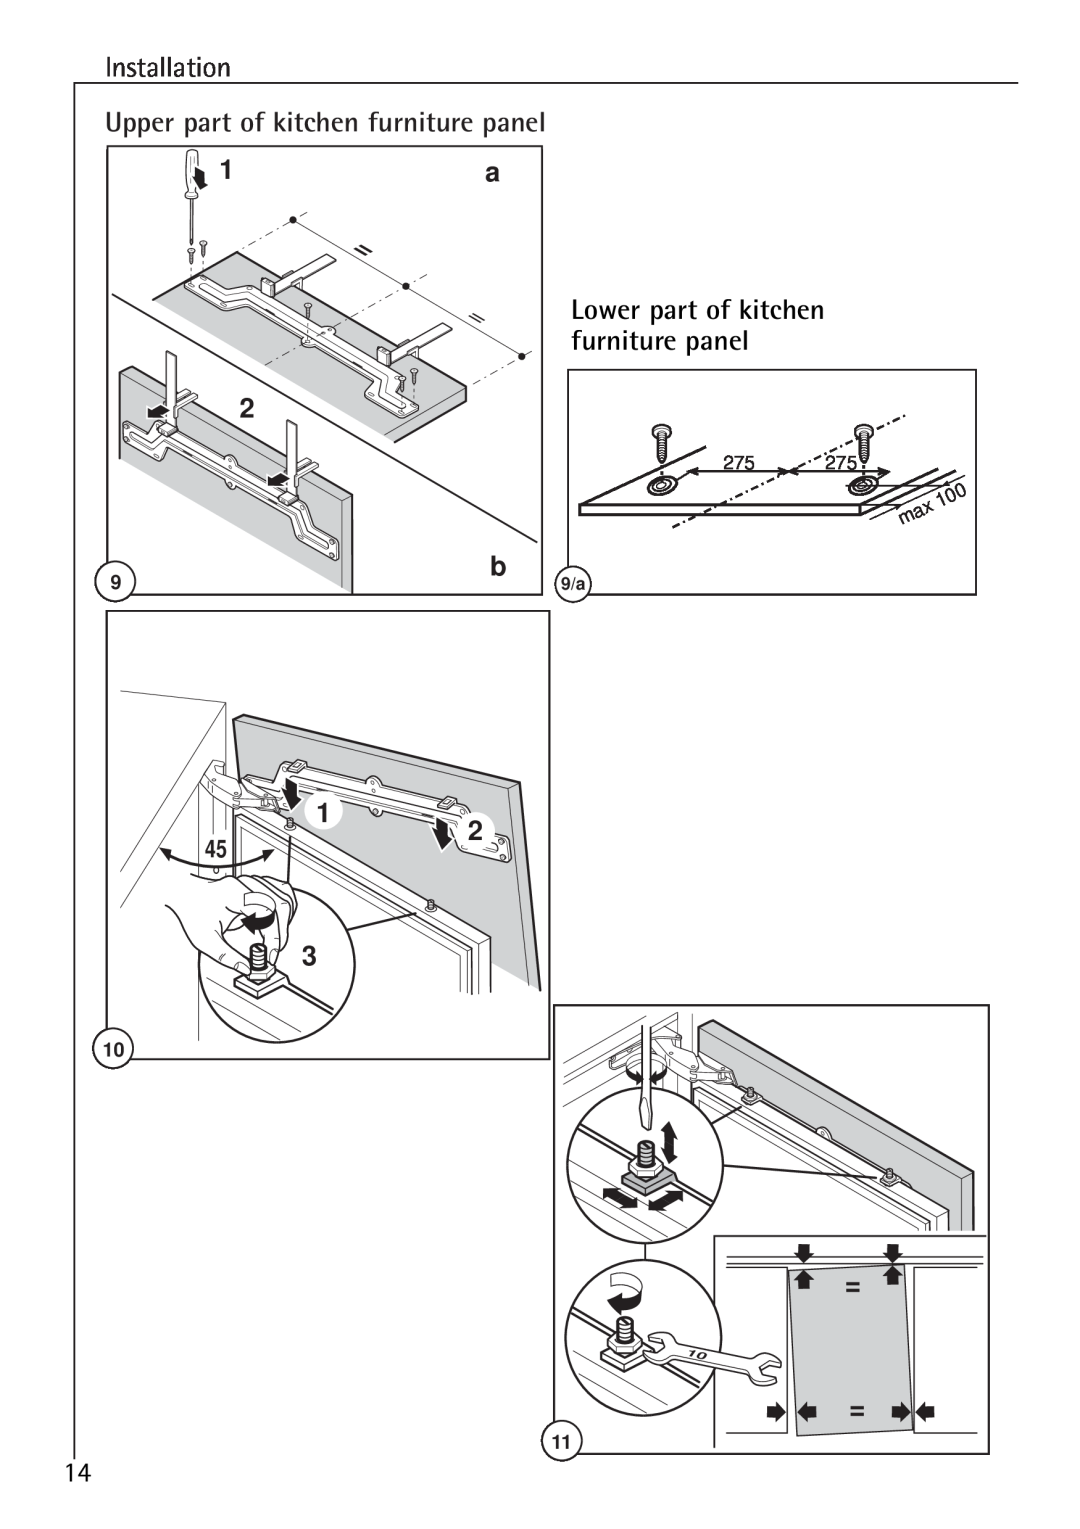 Electrolux 86000 i installation instructions Installation, Upper part of kitchen furniture panel, Lower part of kitchen 